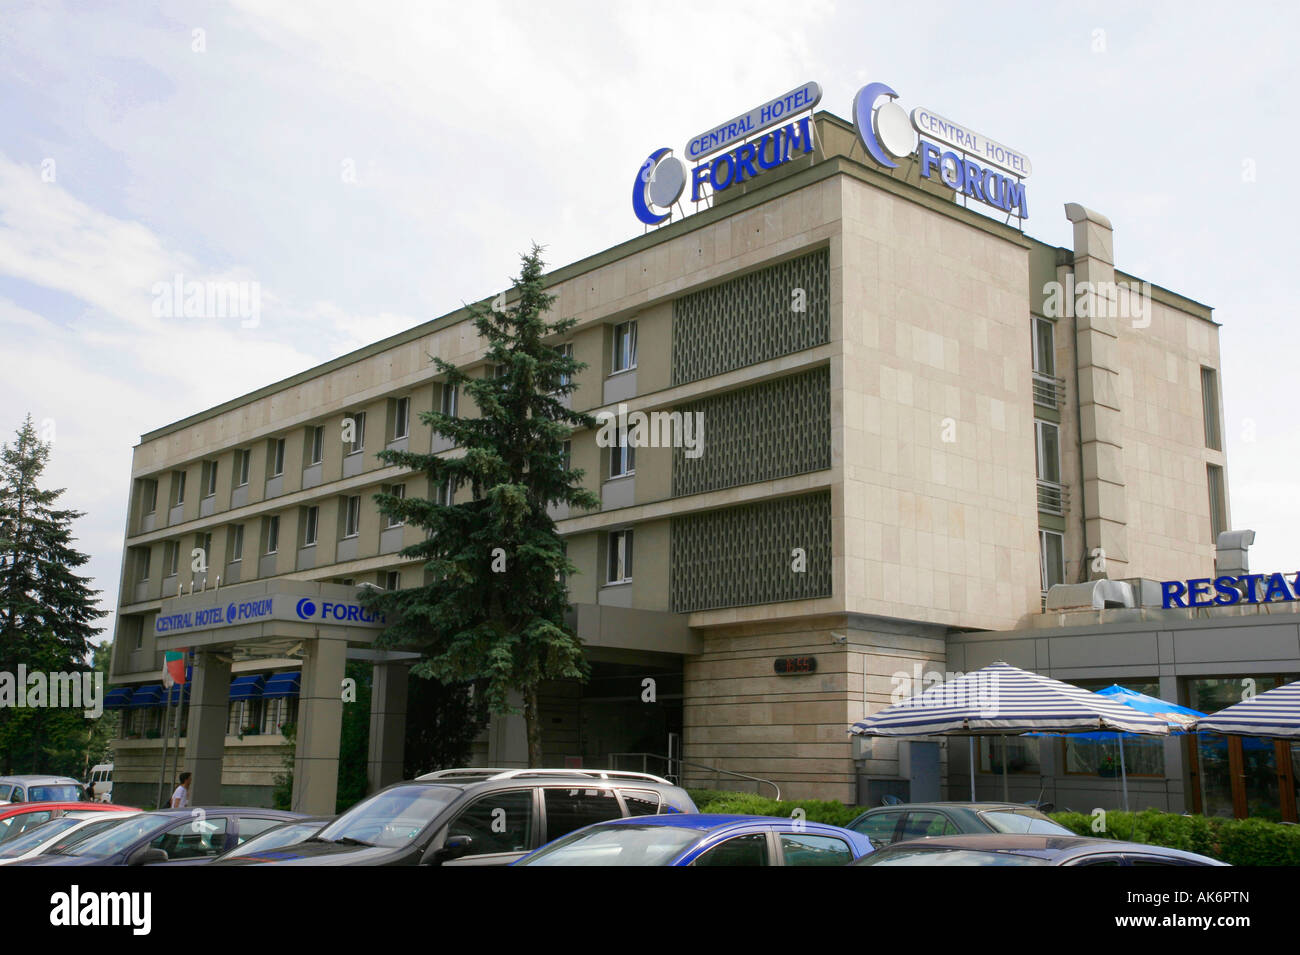 Central Hotel Forum / Sofia Stock Photo - Alamy